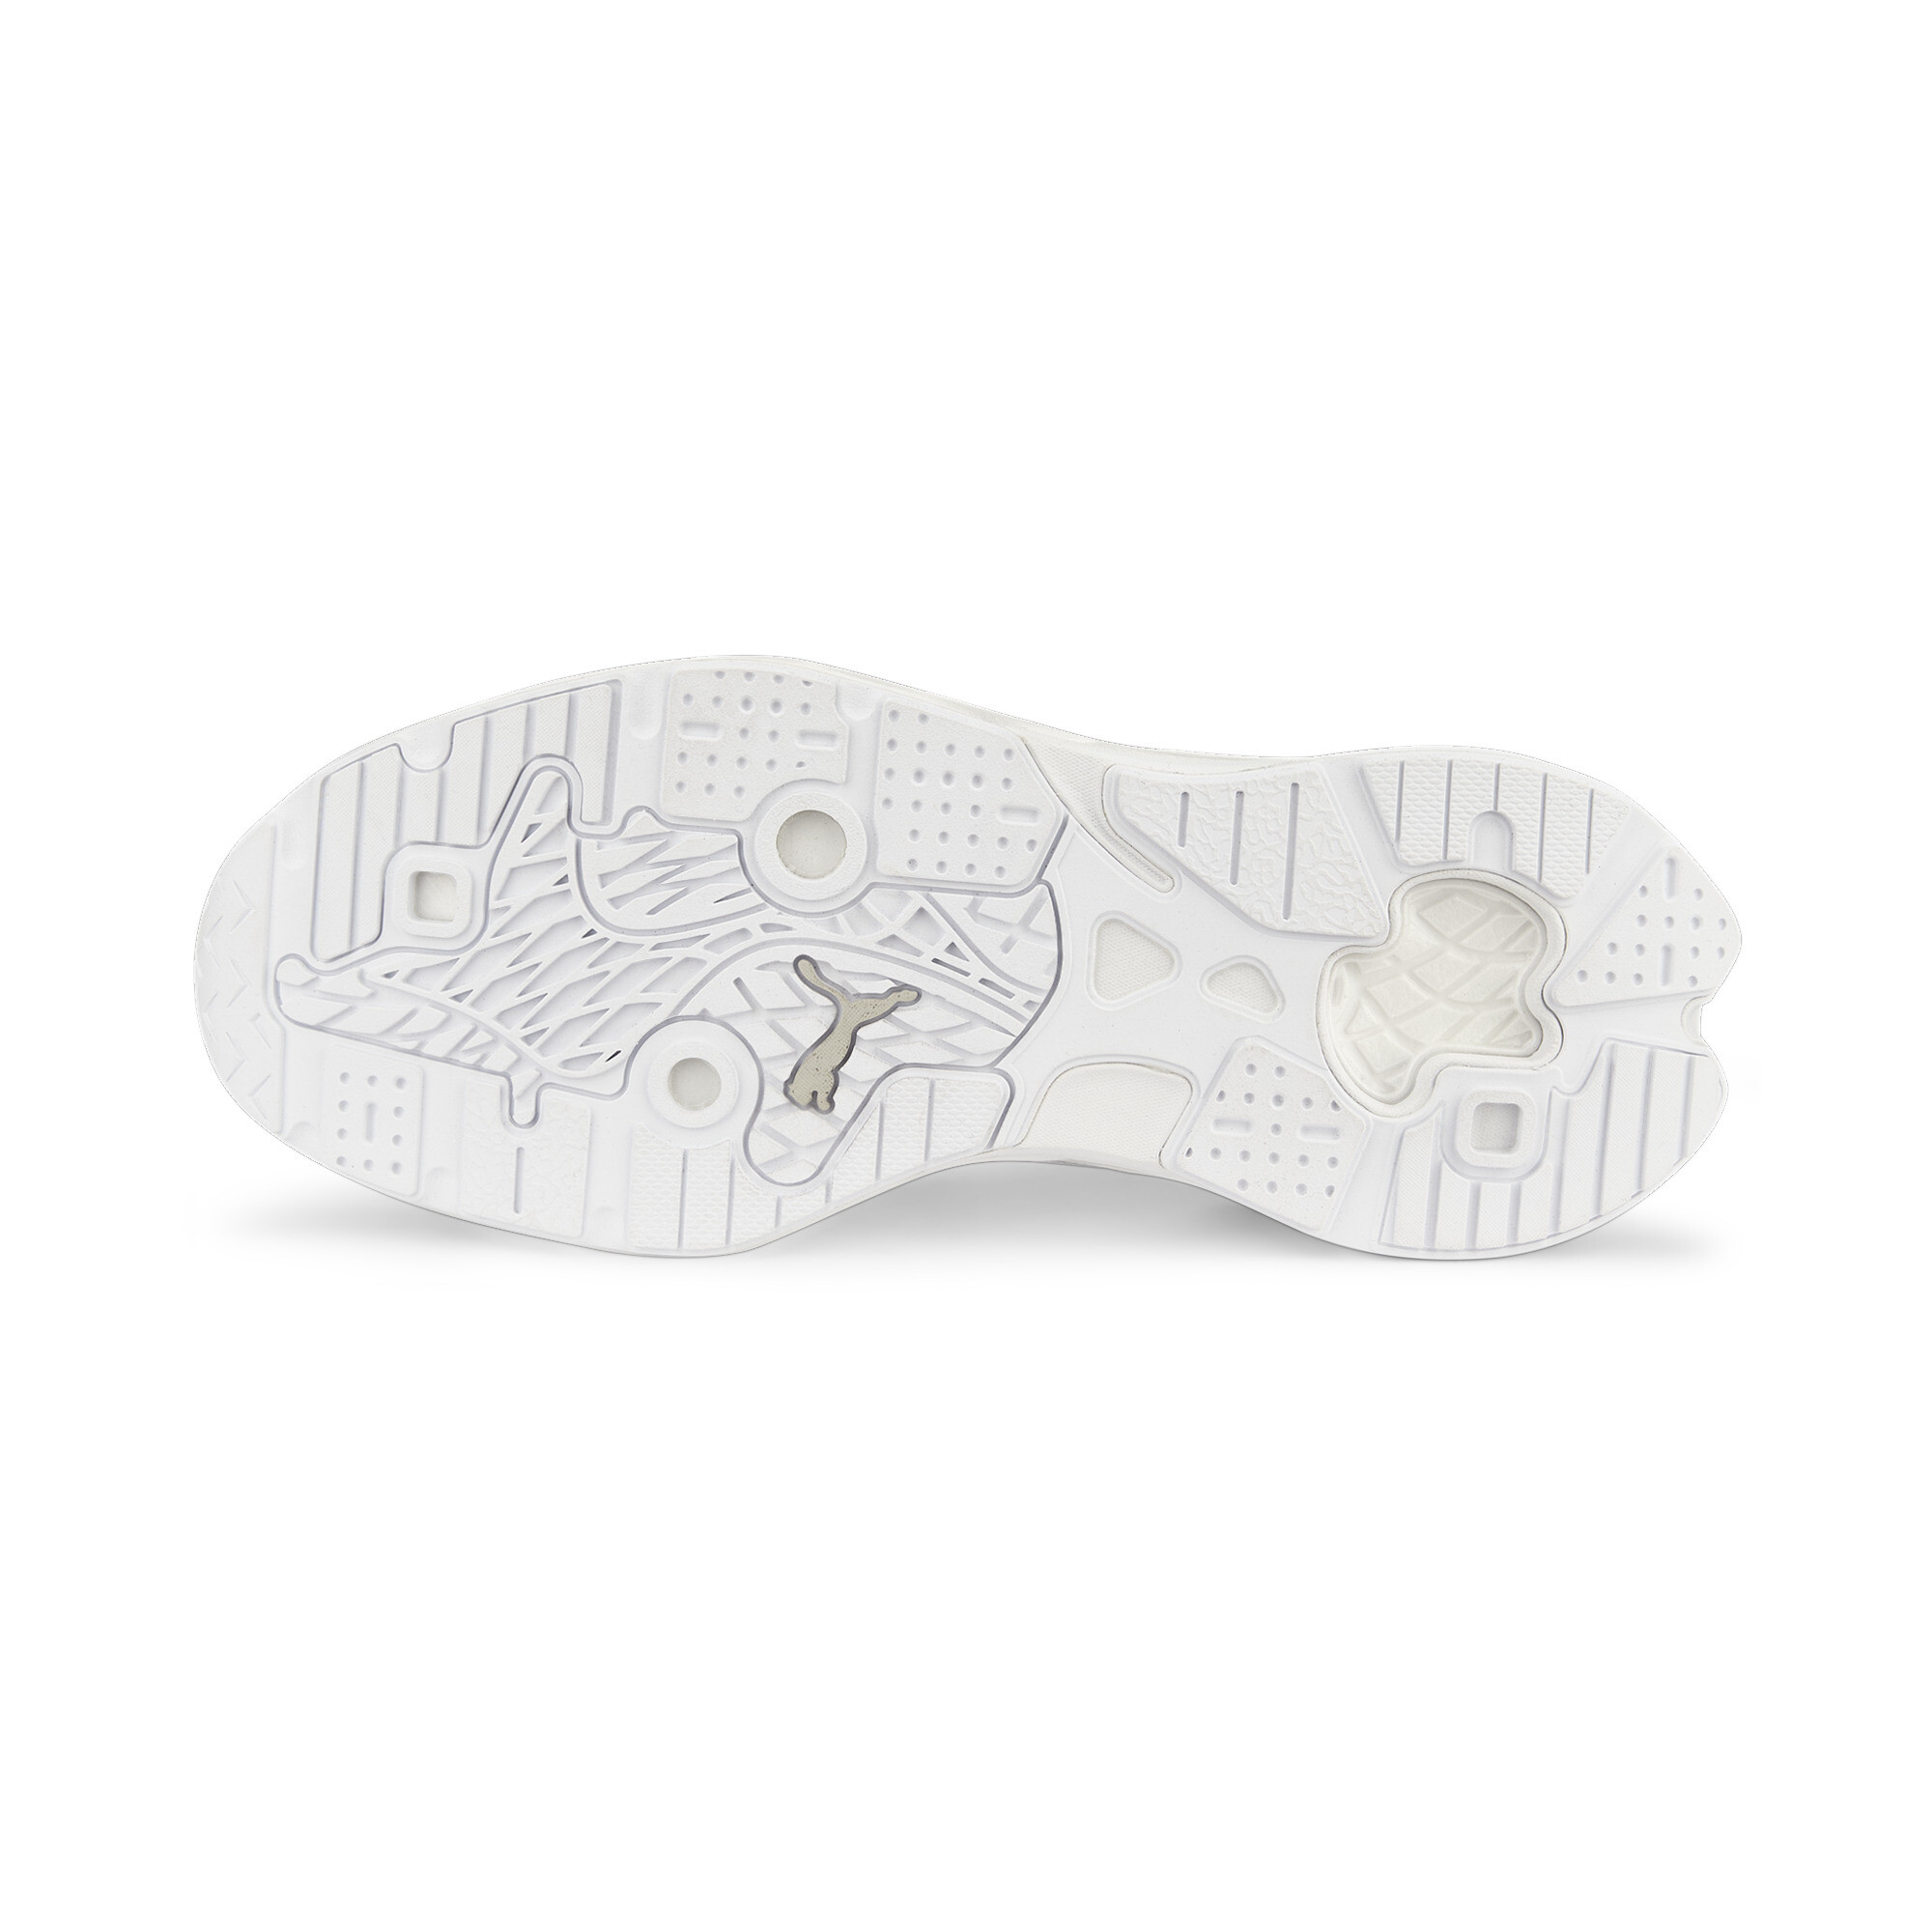 Men's PUMA Extent Nitro Mono Sneakers In White, Size EU 40.5